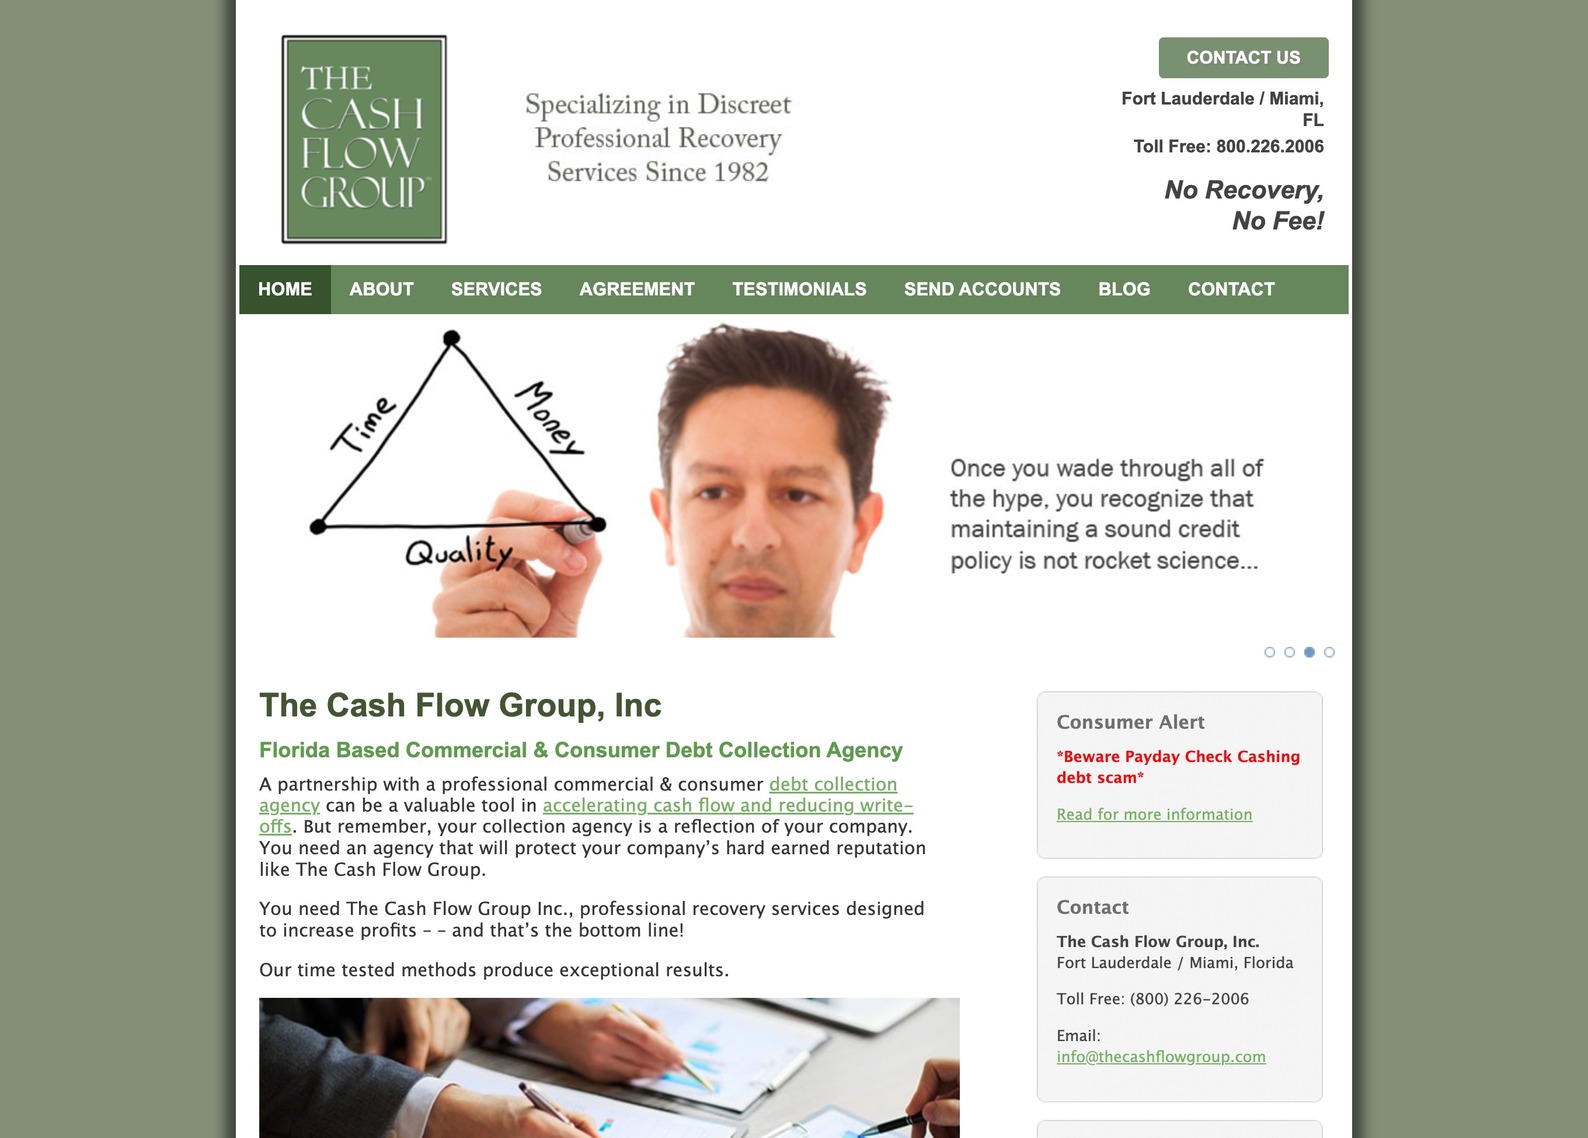 The Cash Flow Group